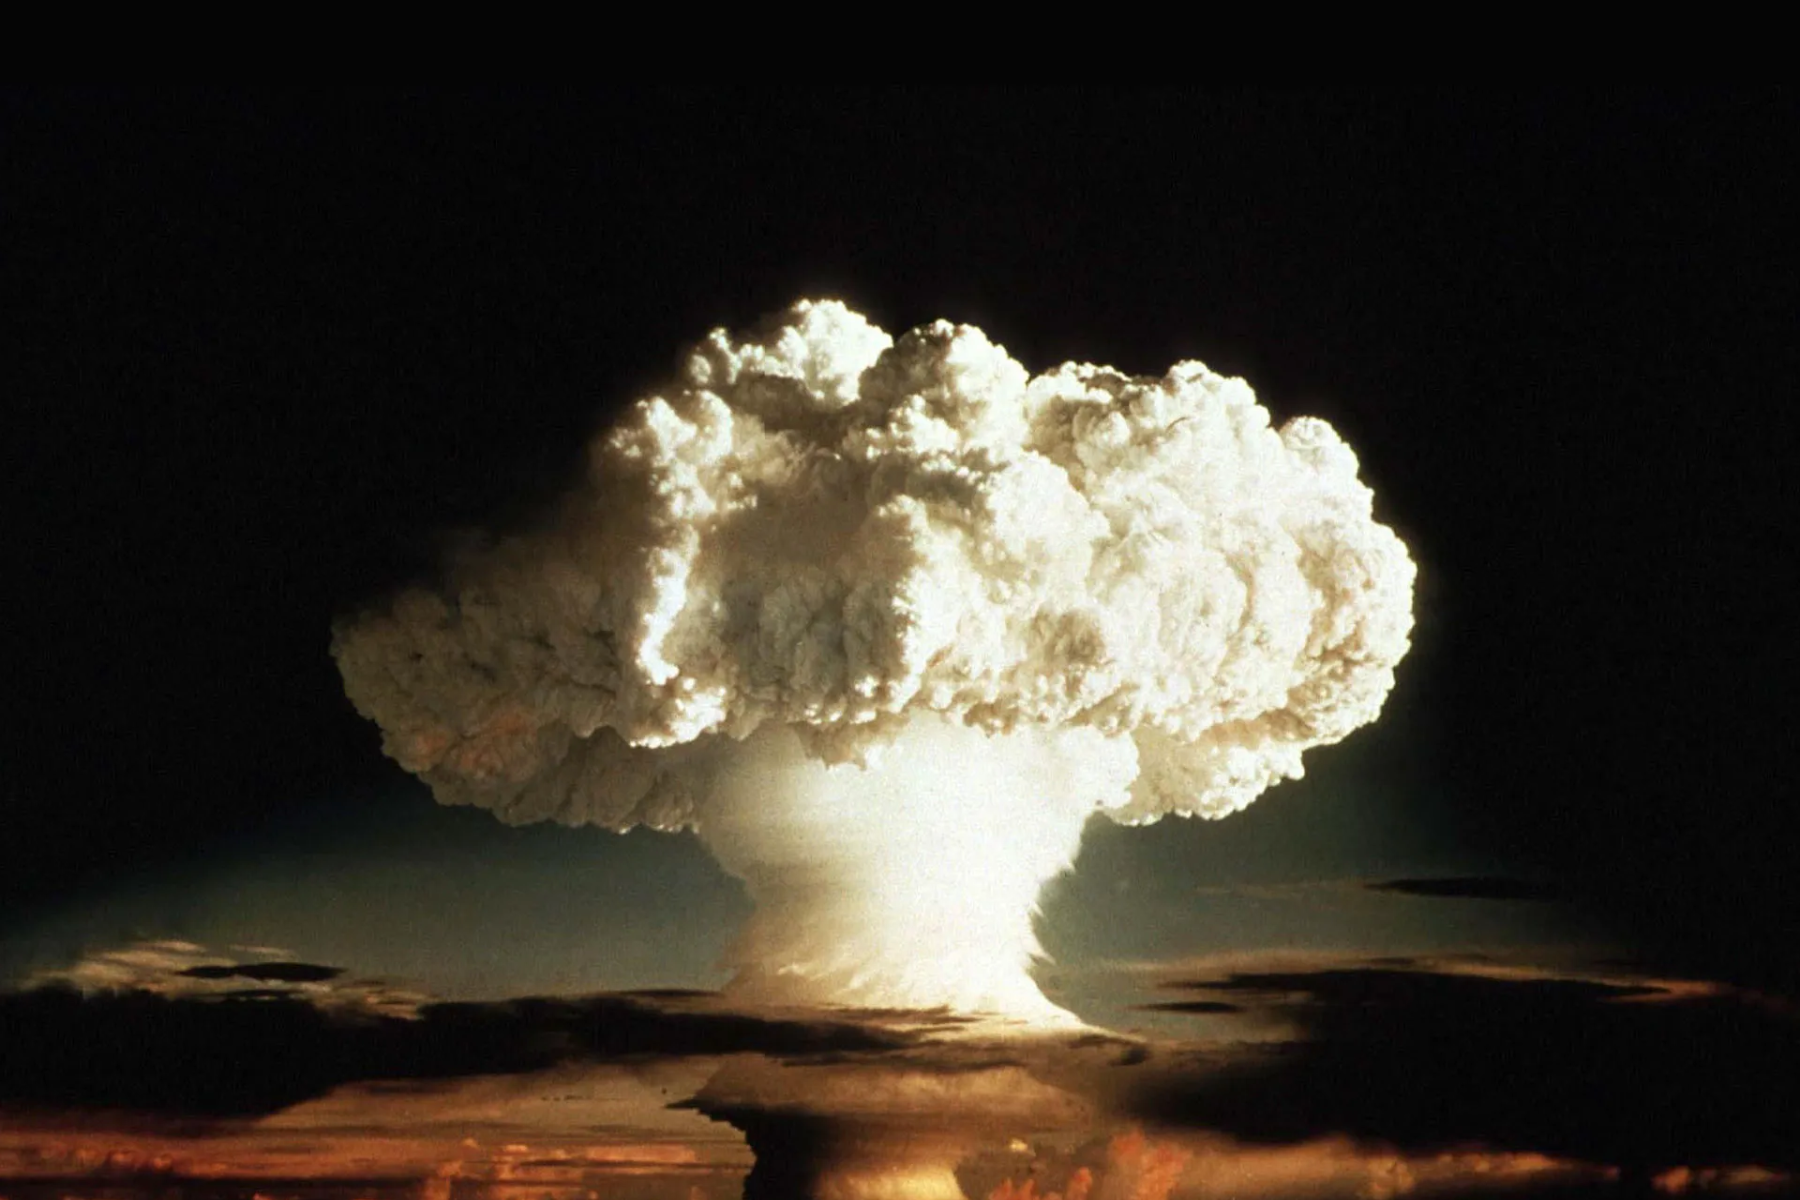 A nuclear explosion